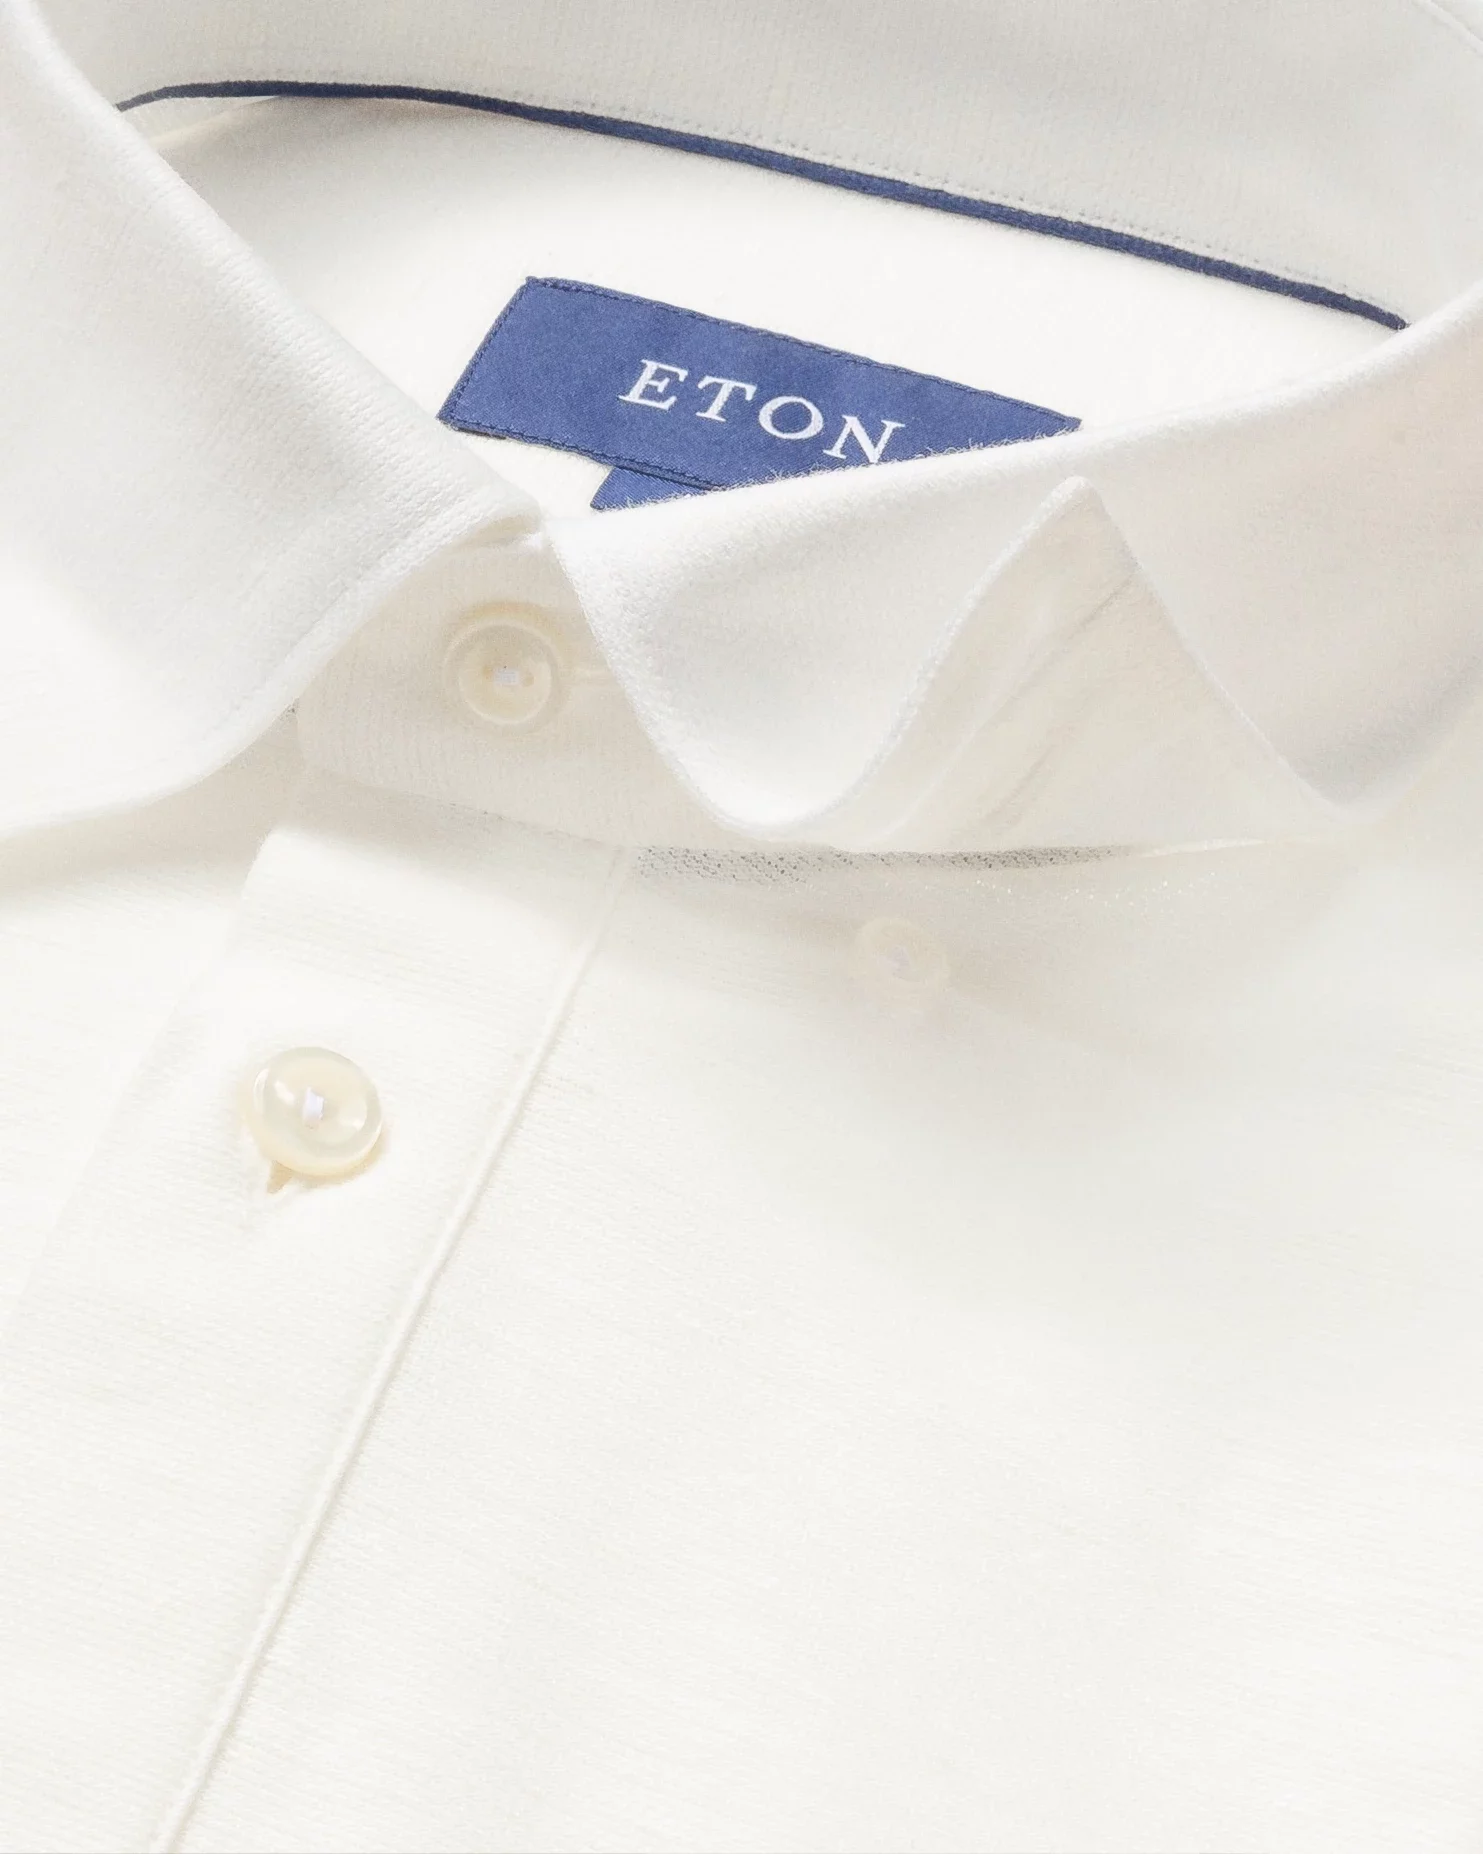 Eton - white cotton linen polo shirt short sleeved